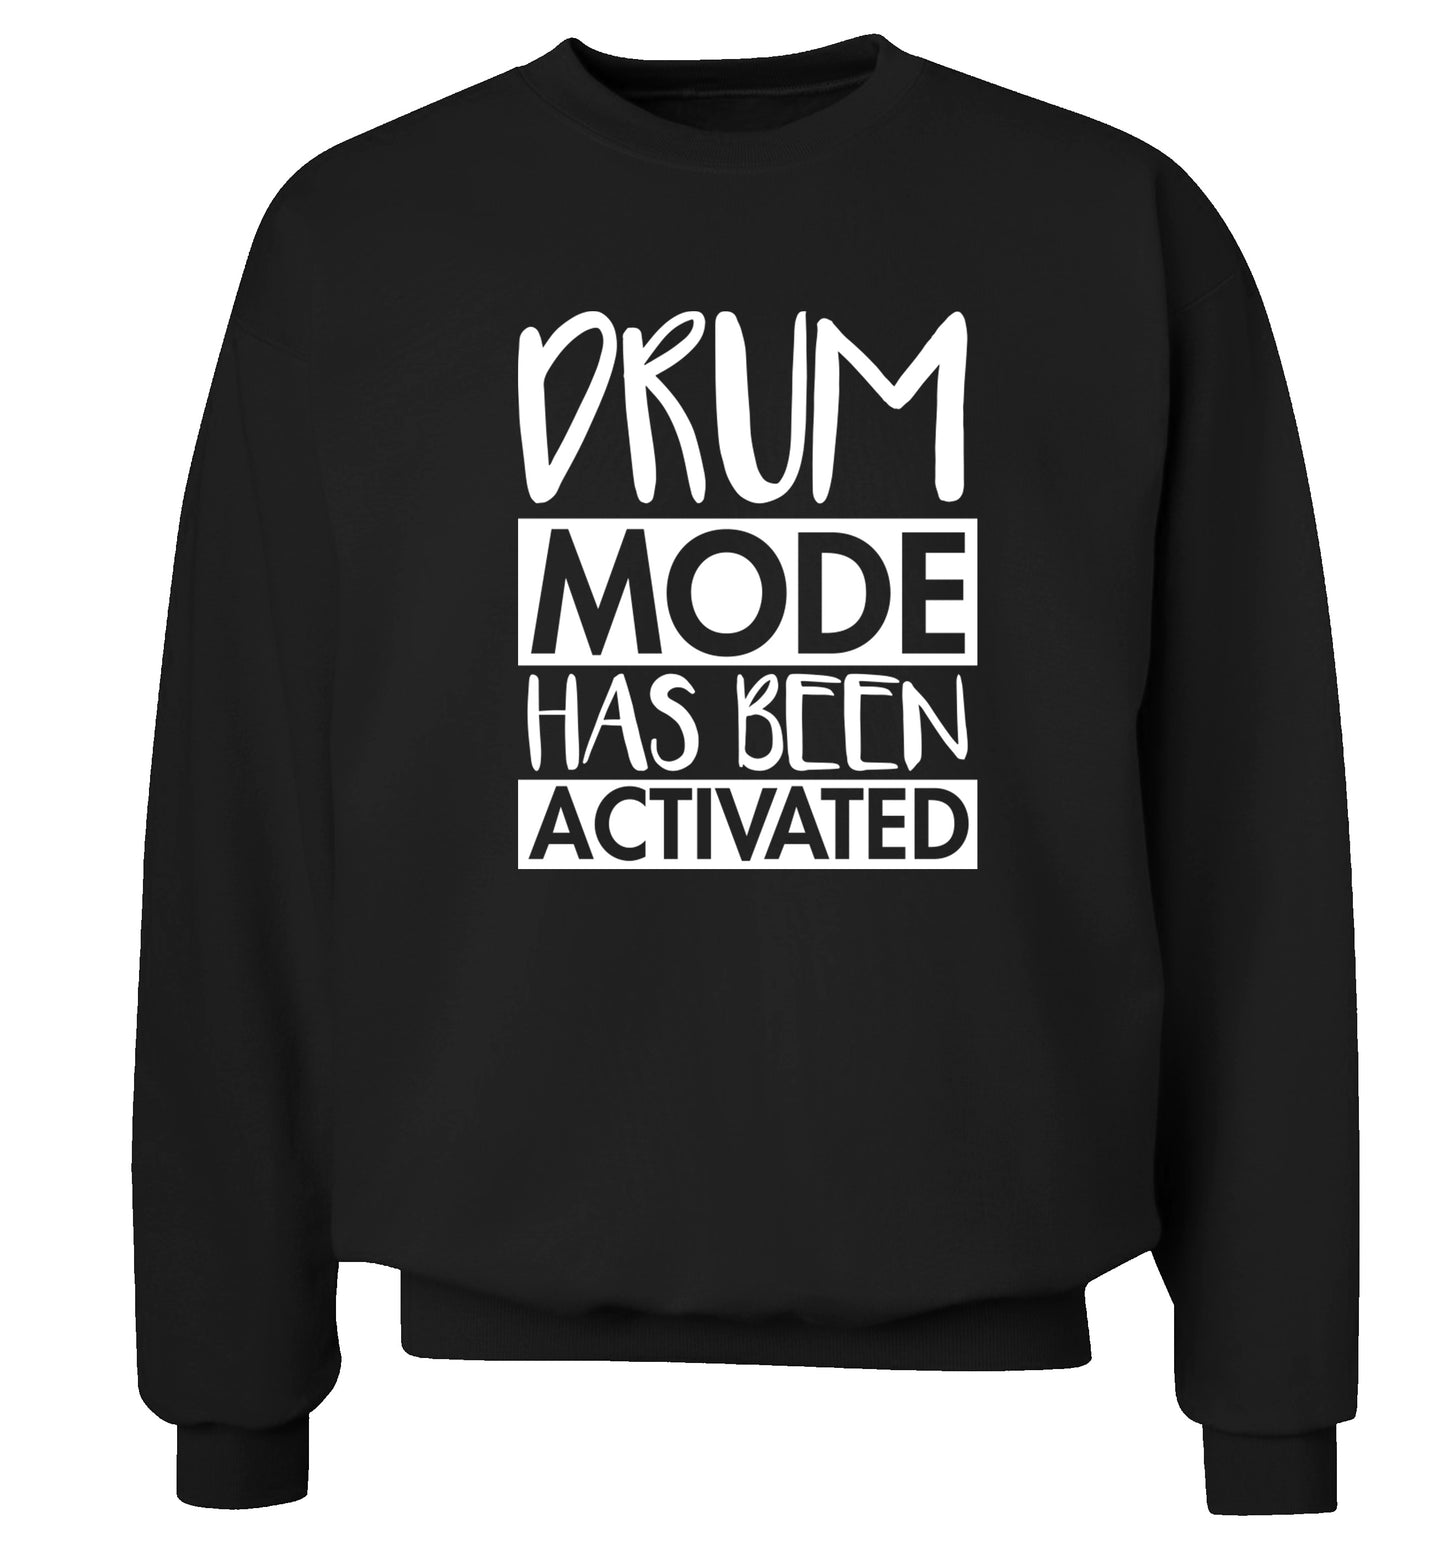 Drum mode activated Adult's unisexblack Sweater 2XL